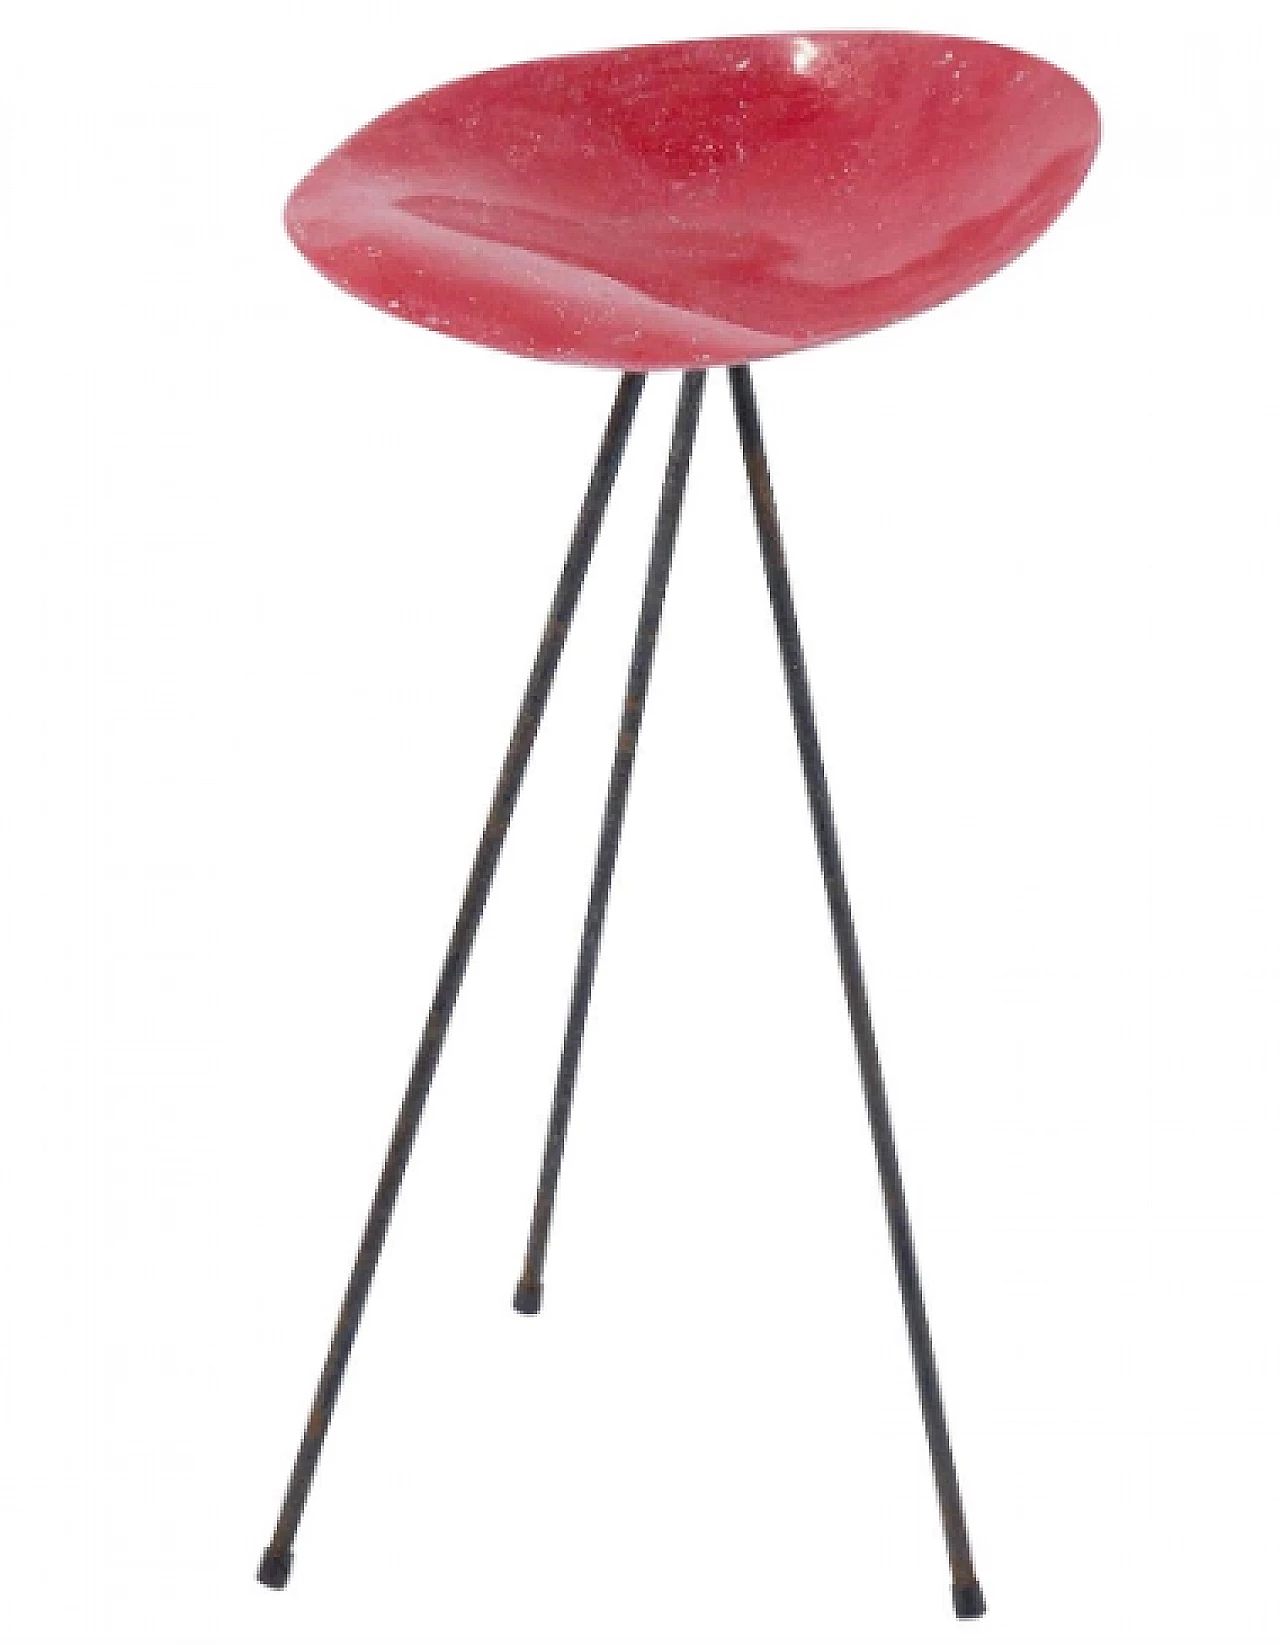 Iron and fiberglass stool by Jean Raymond Picard for Seta, 1950s 1